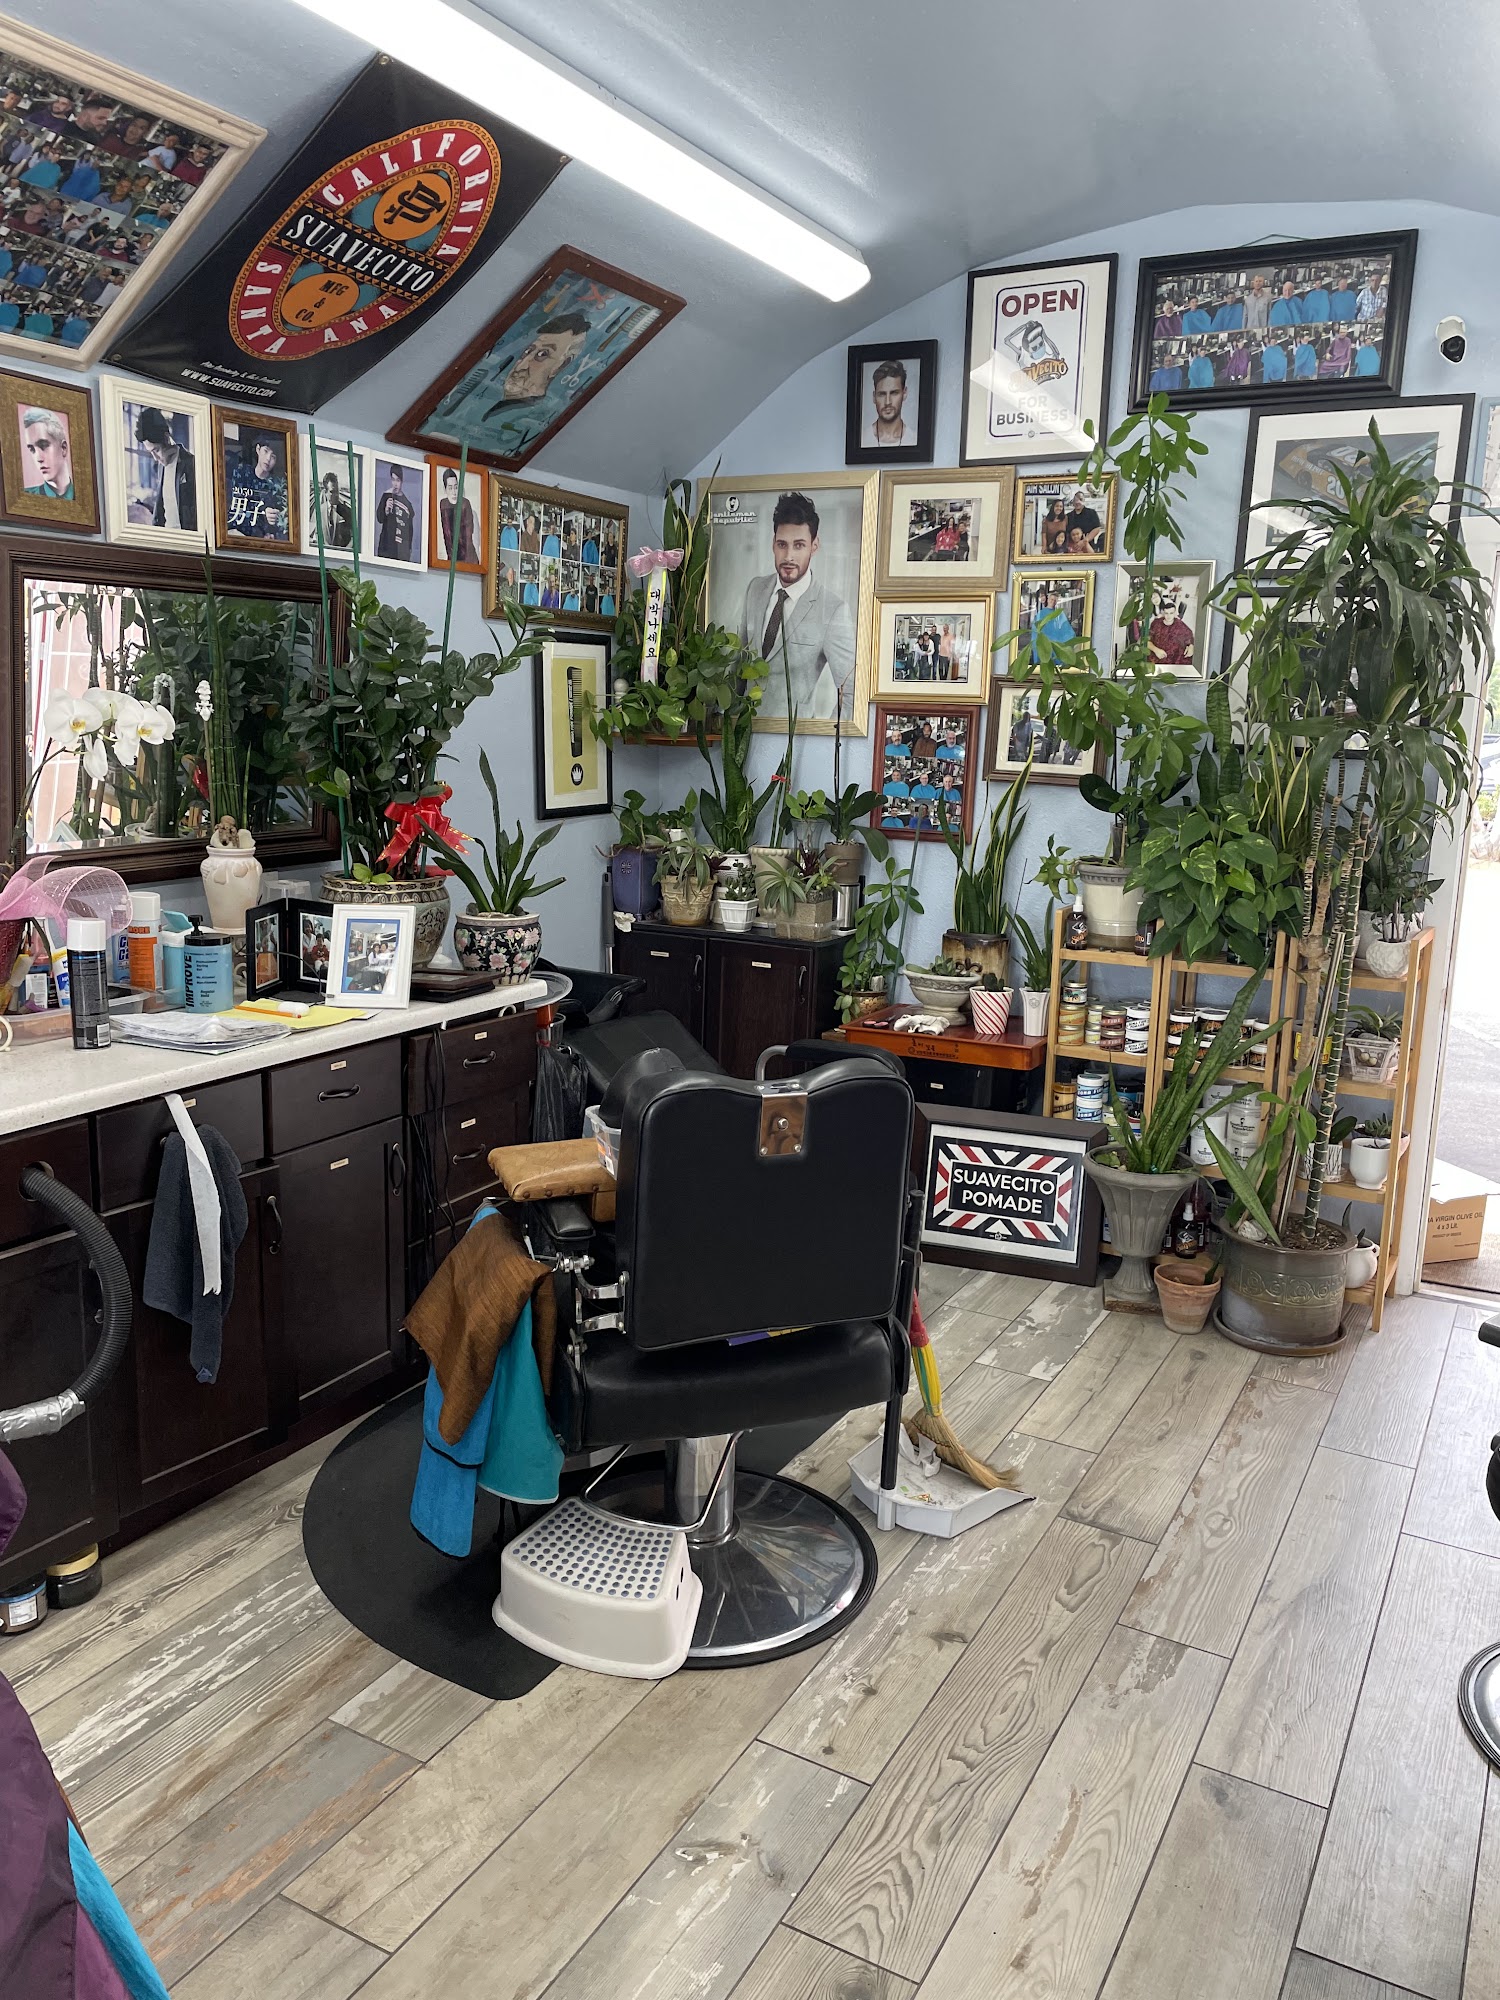 Sunny's Barber Shop